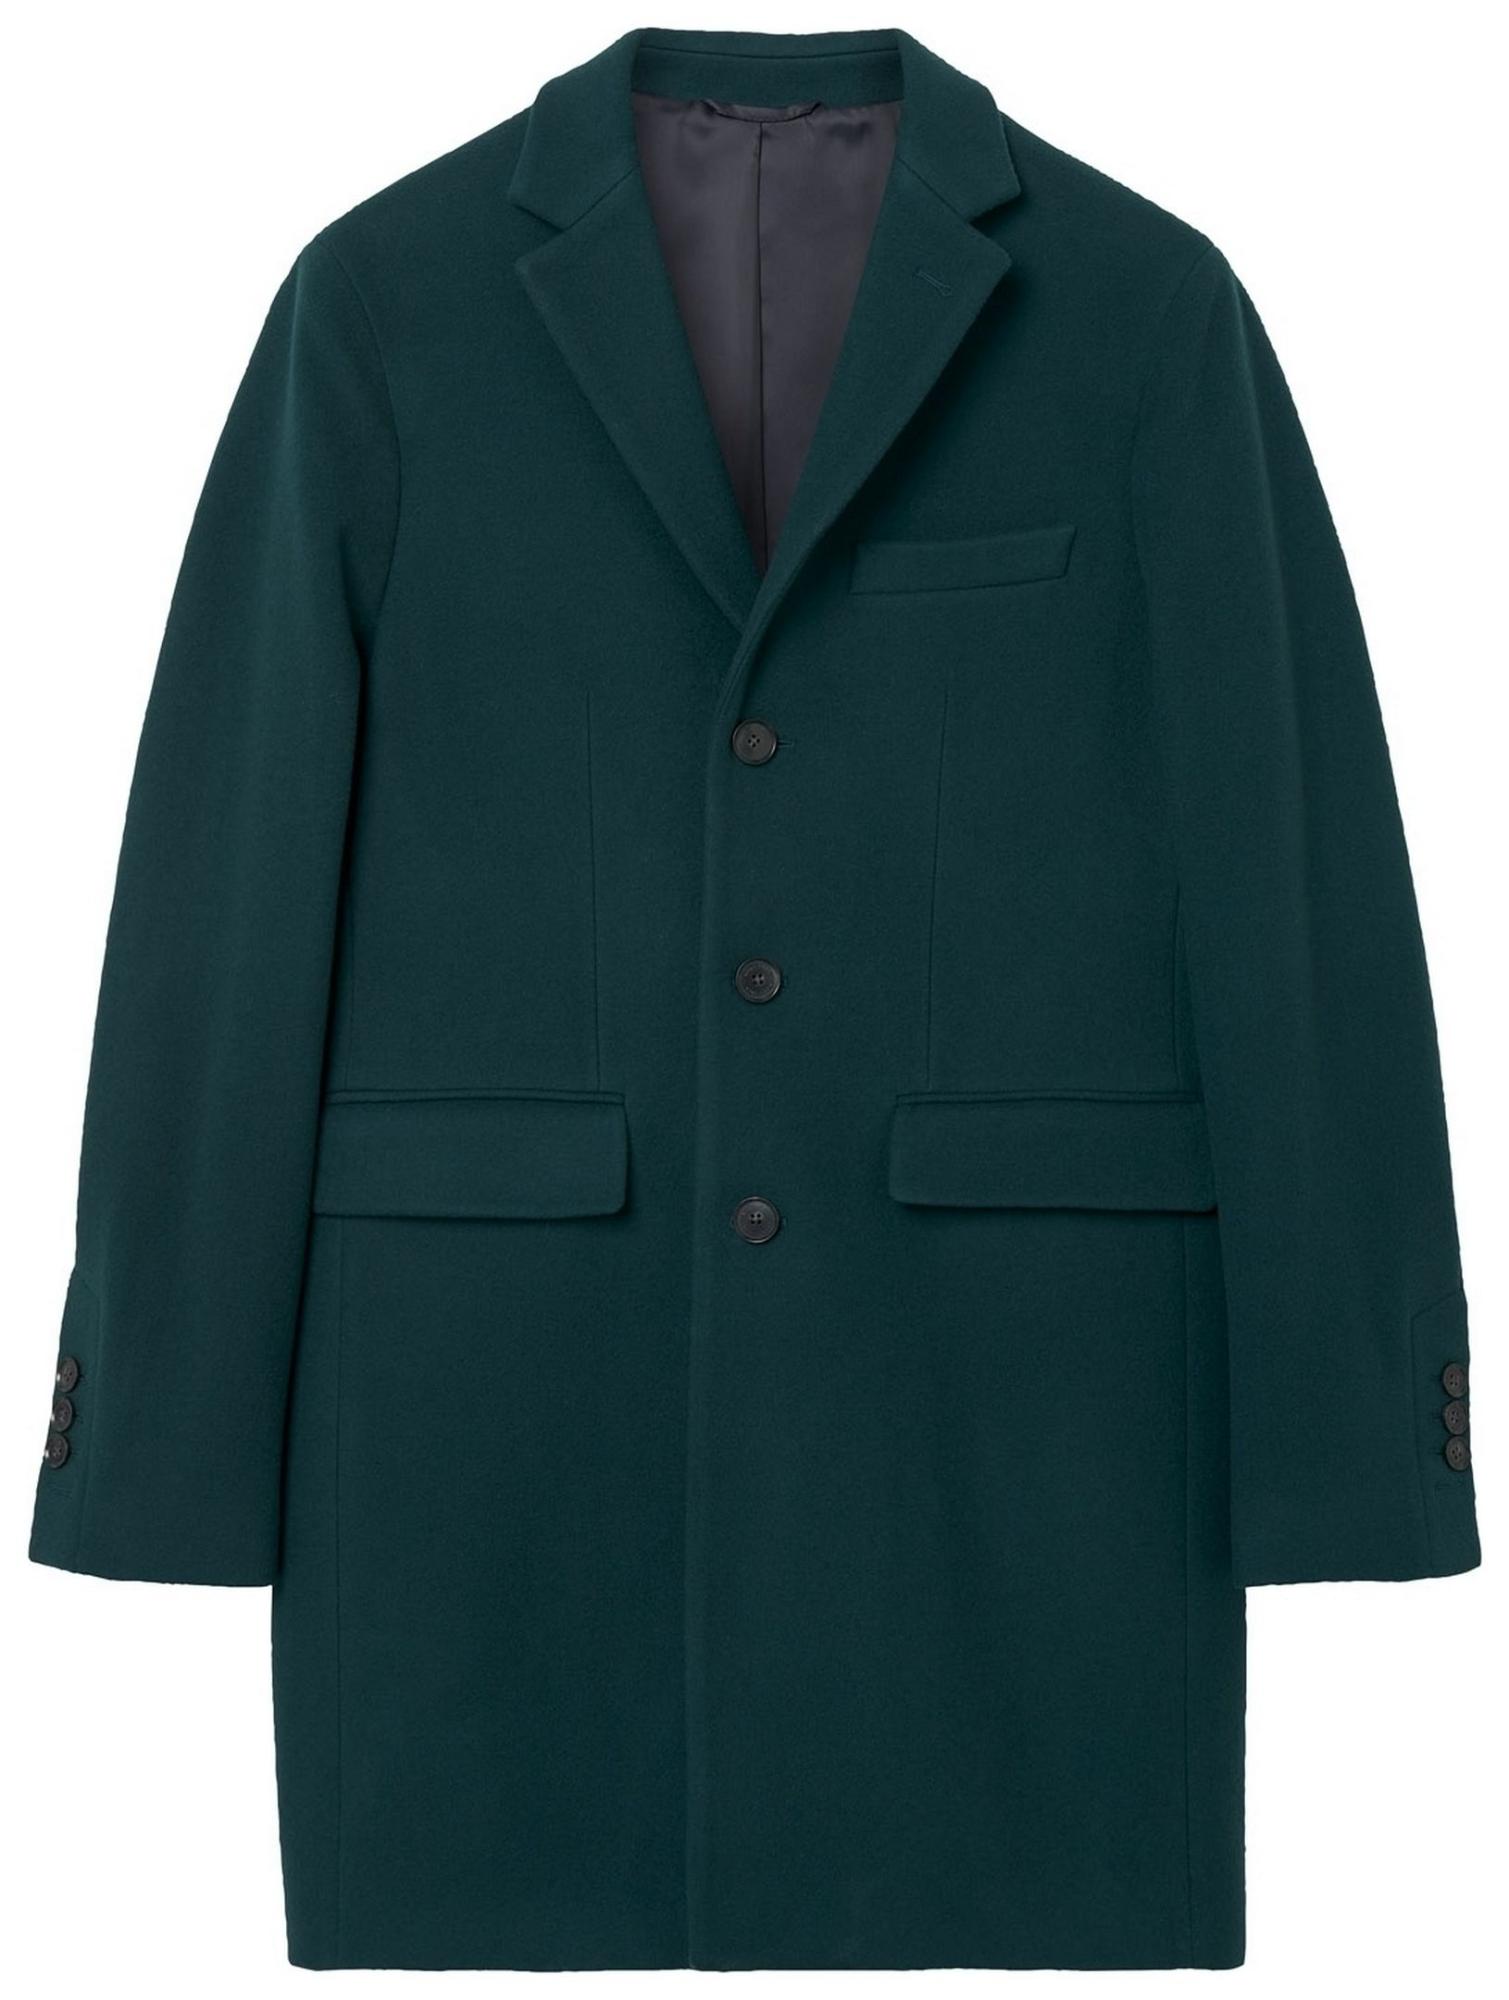 Мужское пальто Gant, зеленое